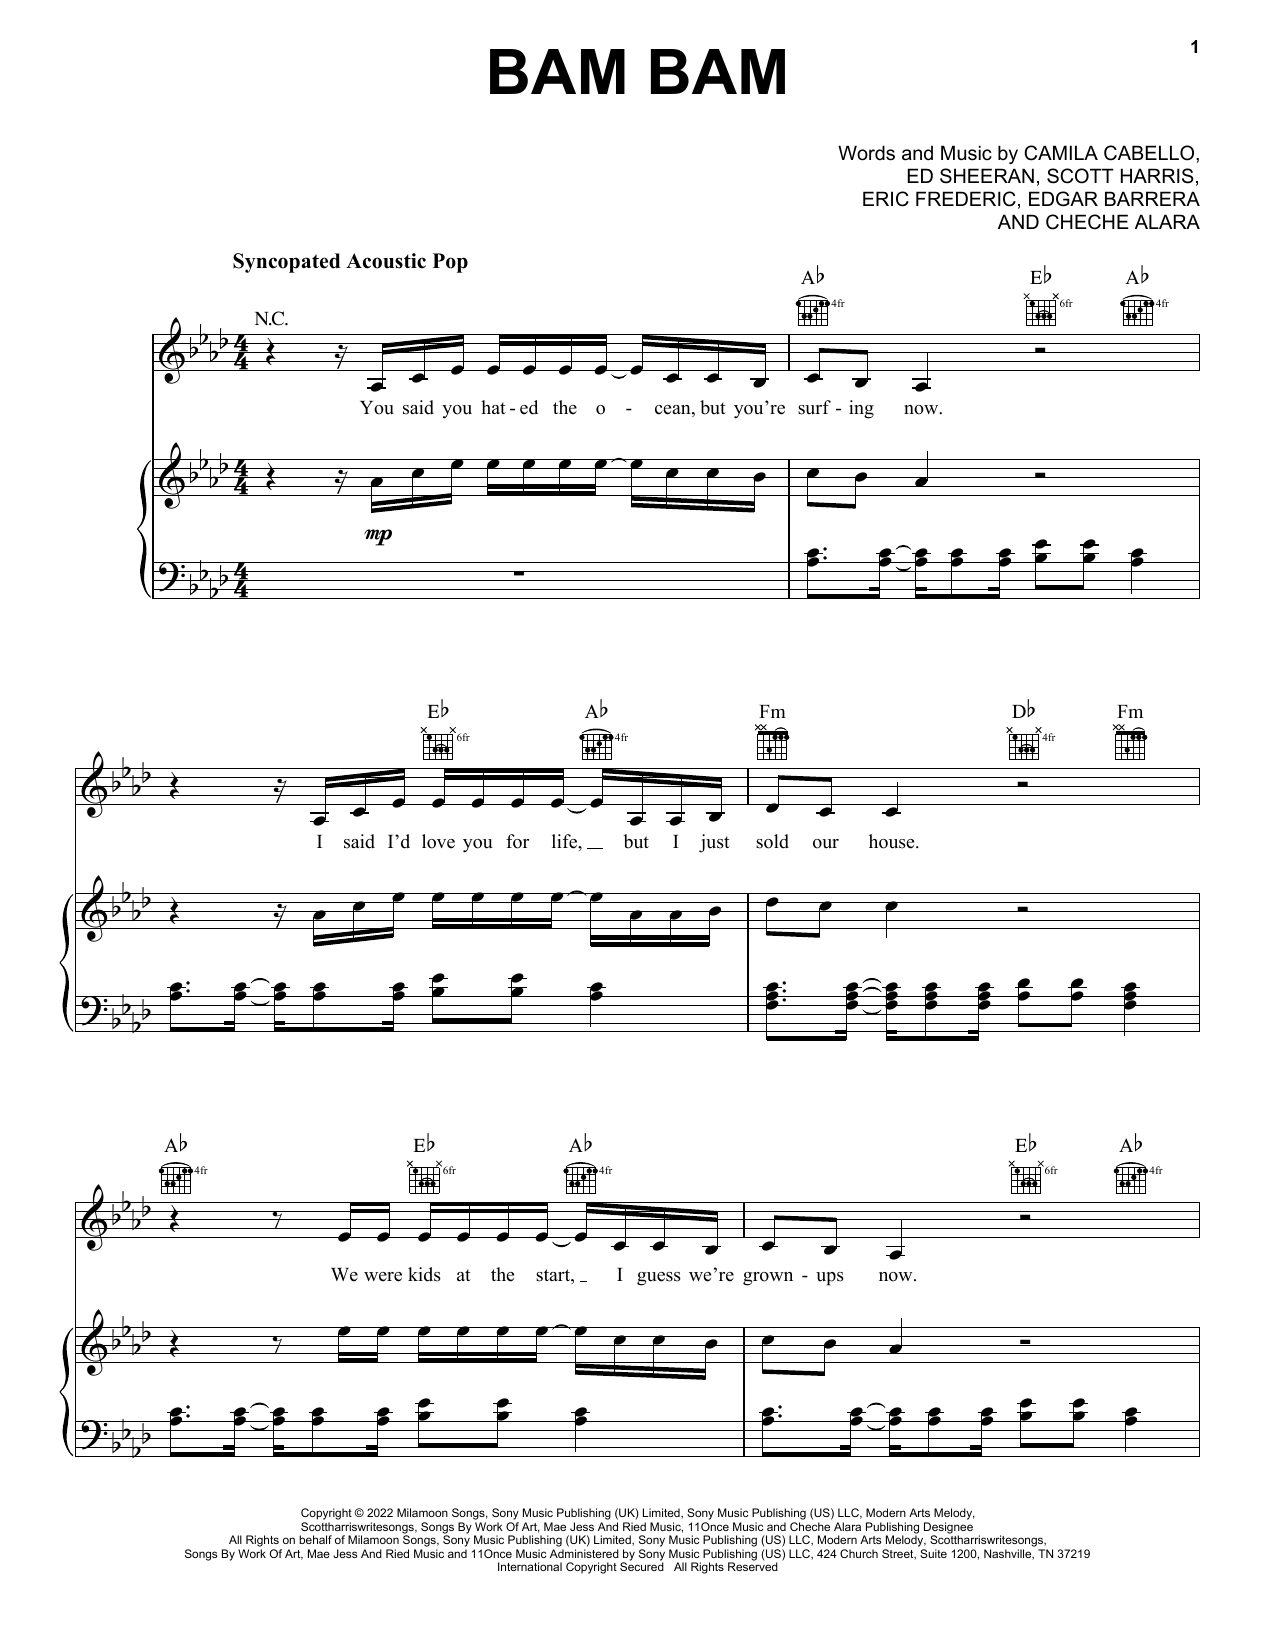 Camila Cabello Bam Bam (feat. Ed Sheeran) Sheet Music Notes & Chords for Easy Piano - Download or Print PDF